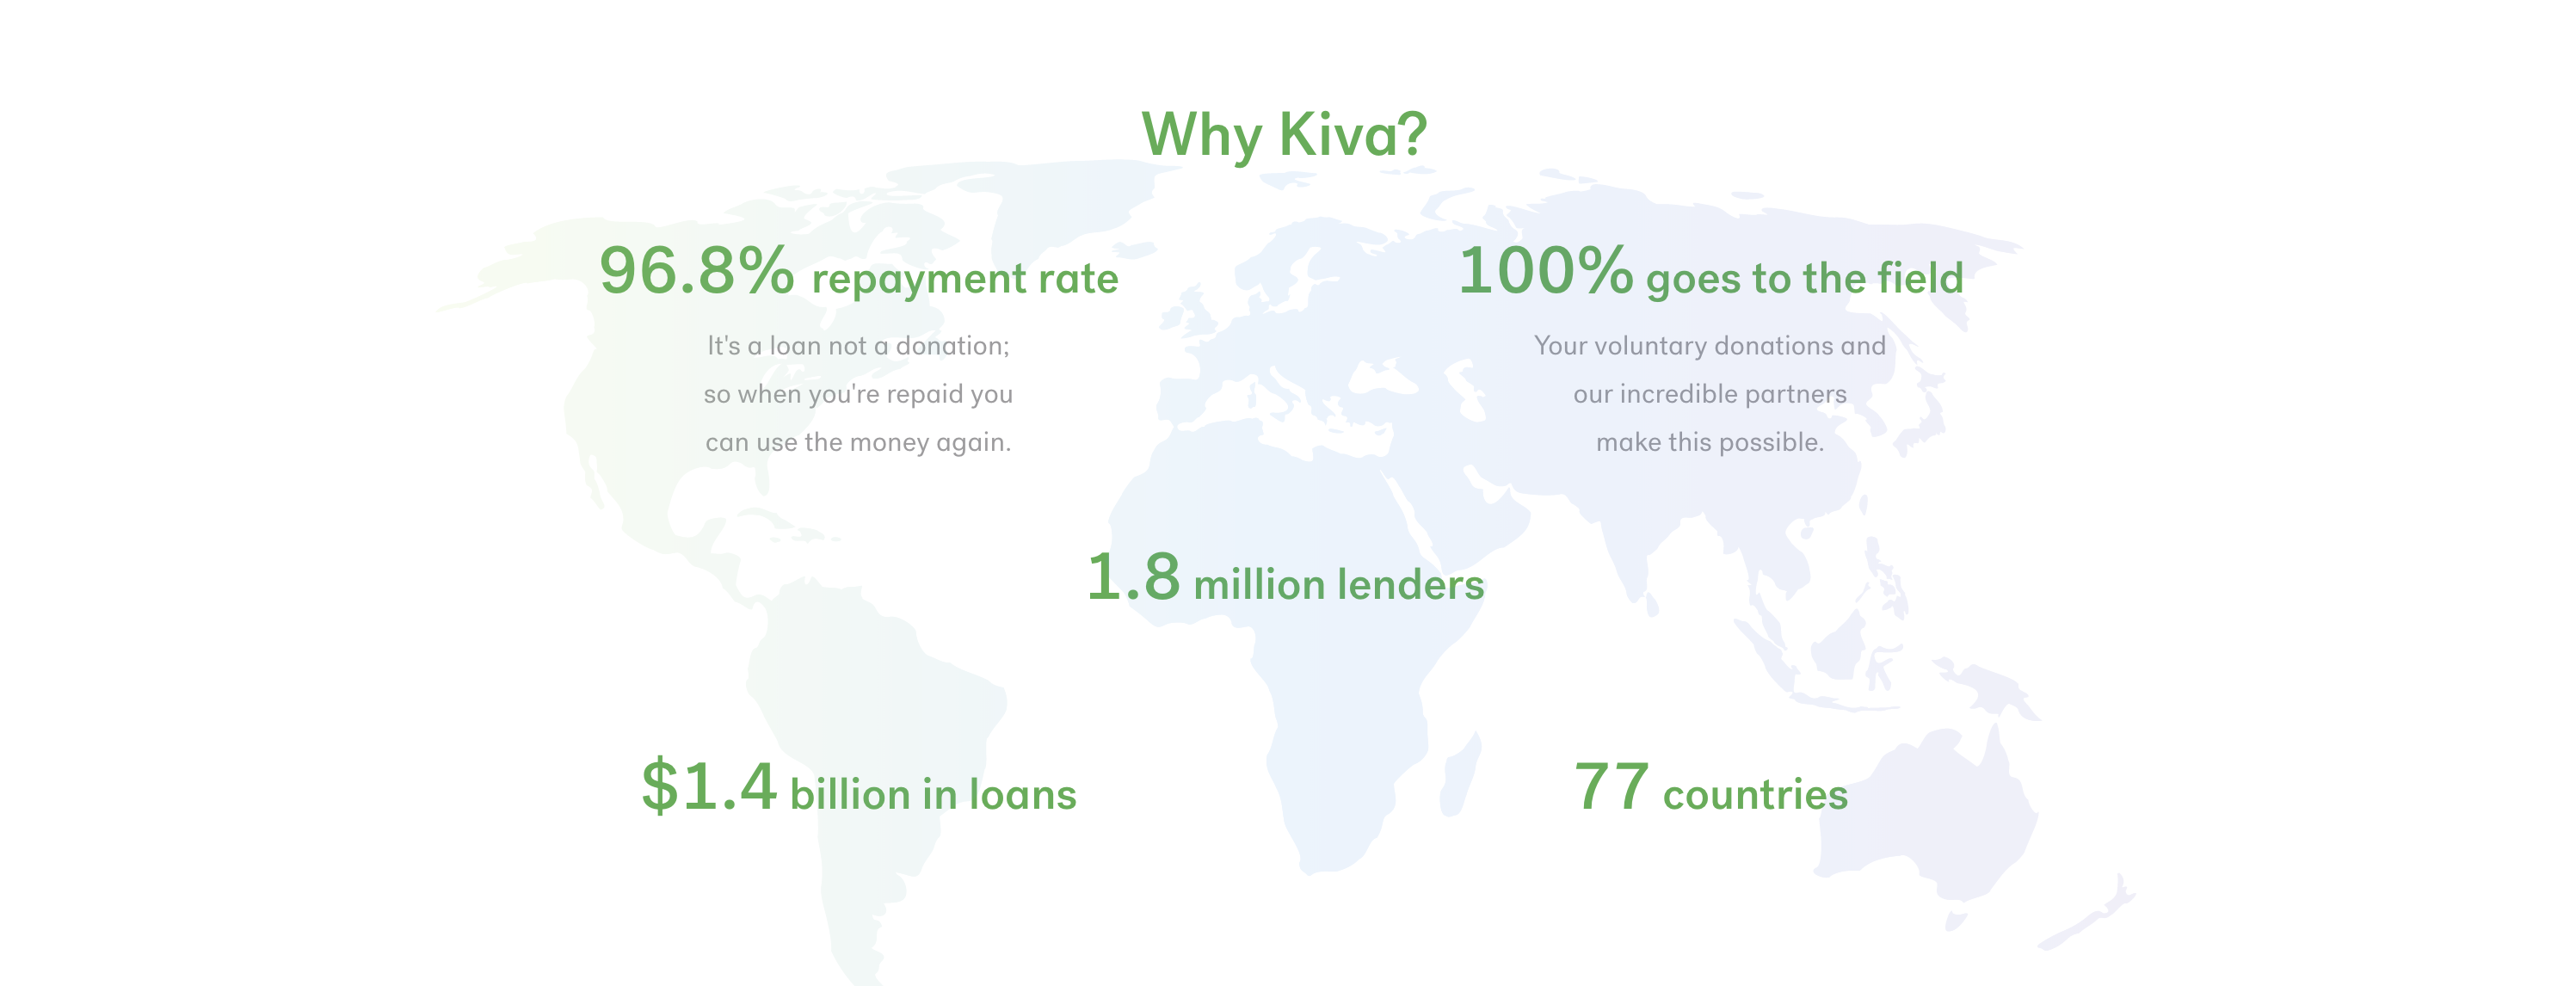 Kiva helps people across the globe